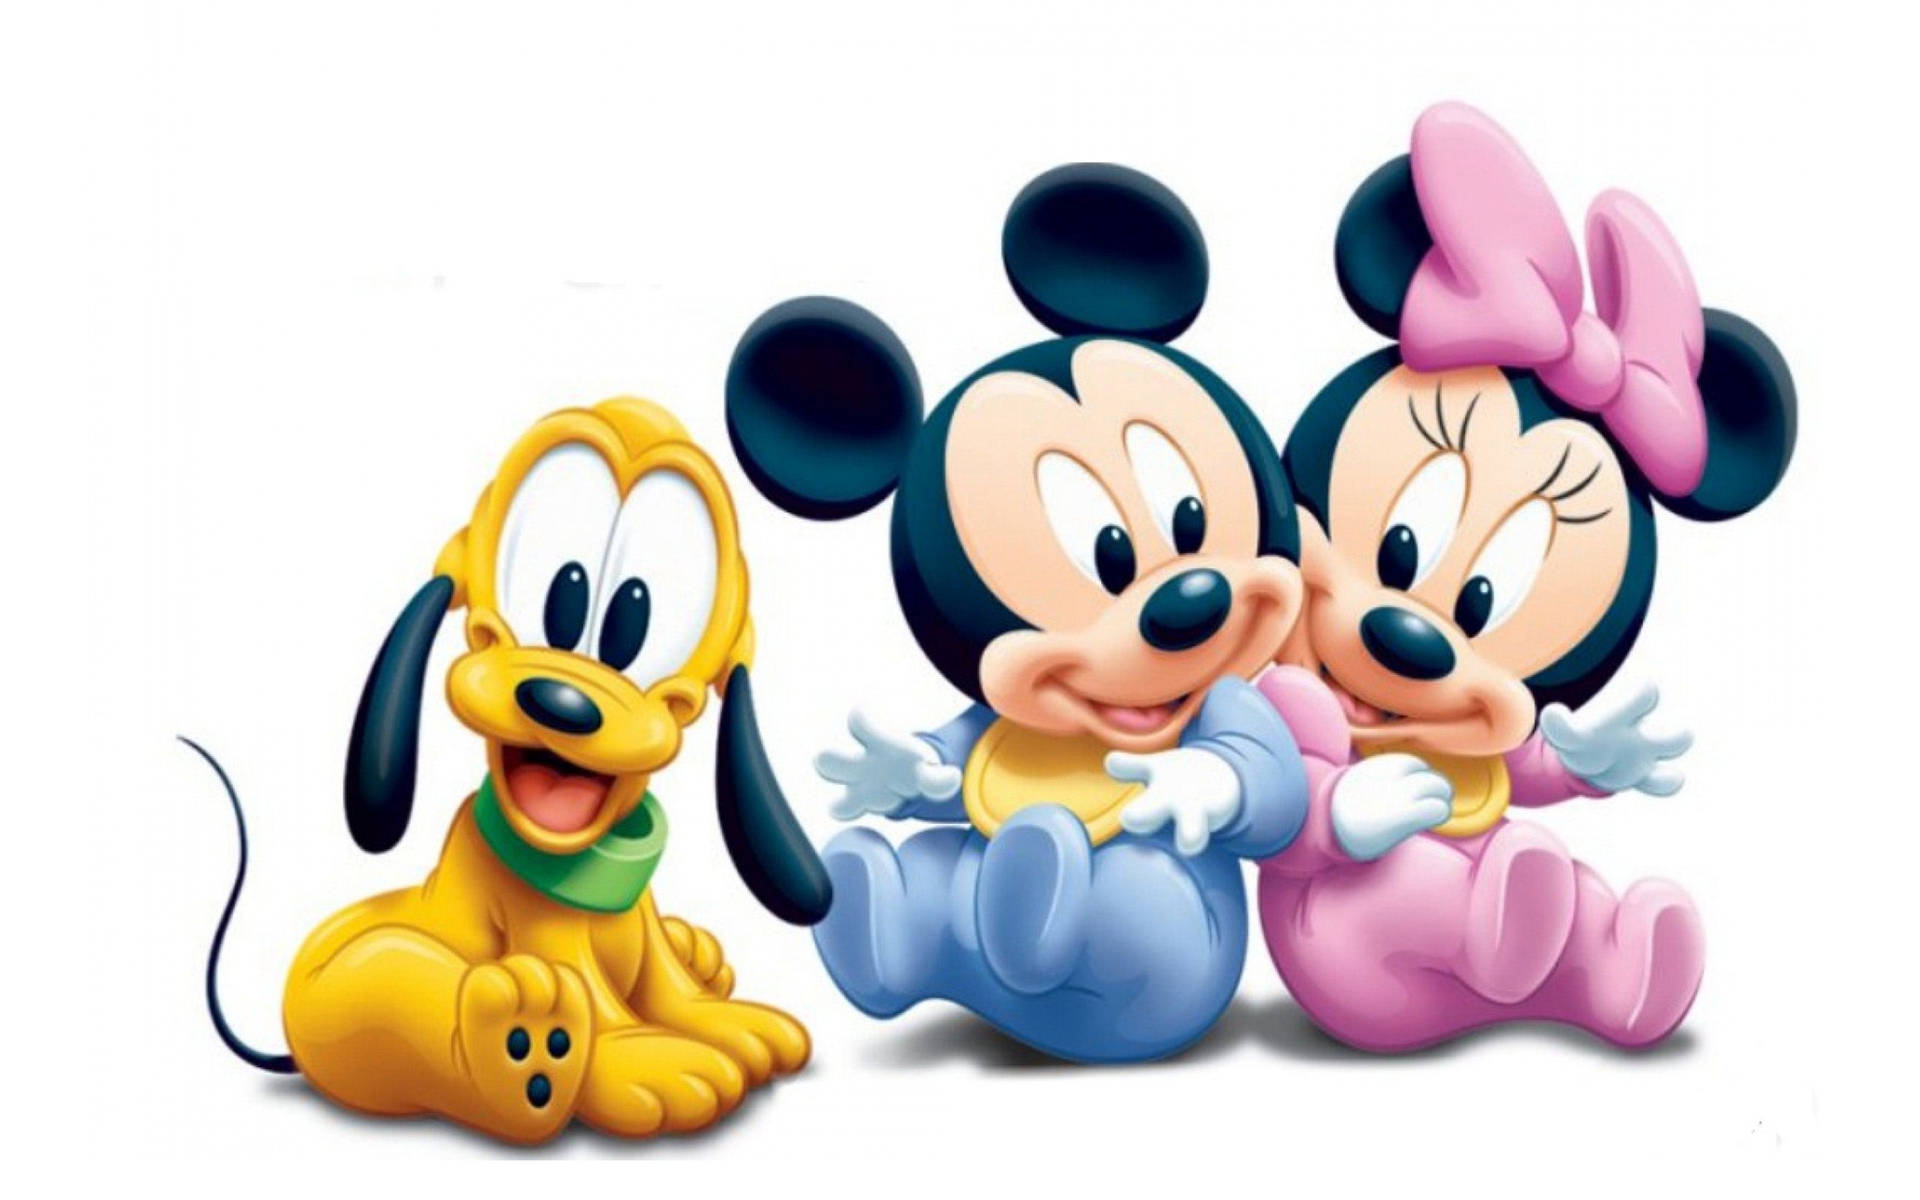 Disneypluto, Mickey, Minnie - Disney Pluto, Mickey, Minnie Wallpaper